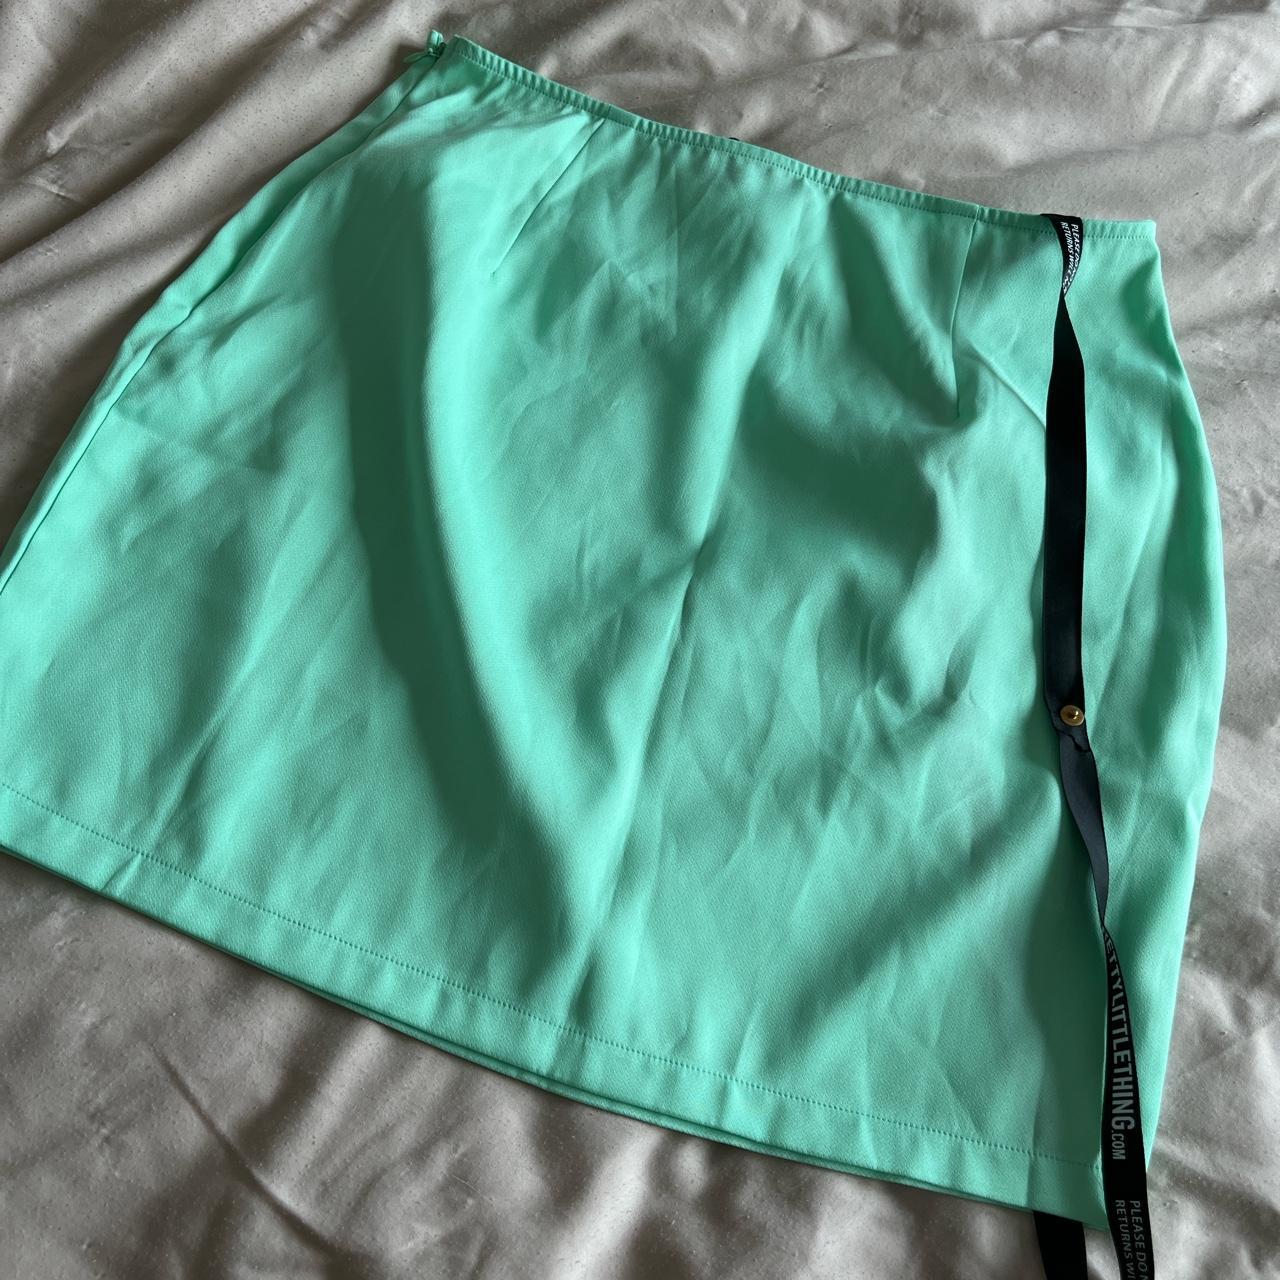 Pretty little thing PLT green mint skirt Mini... - Depop